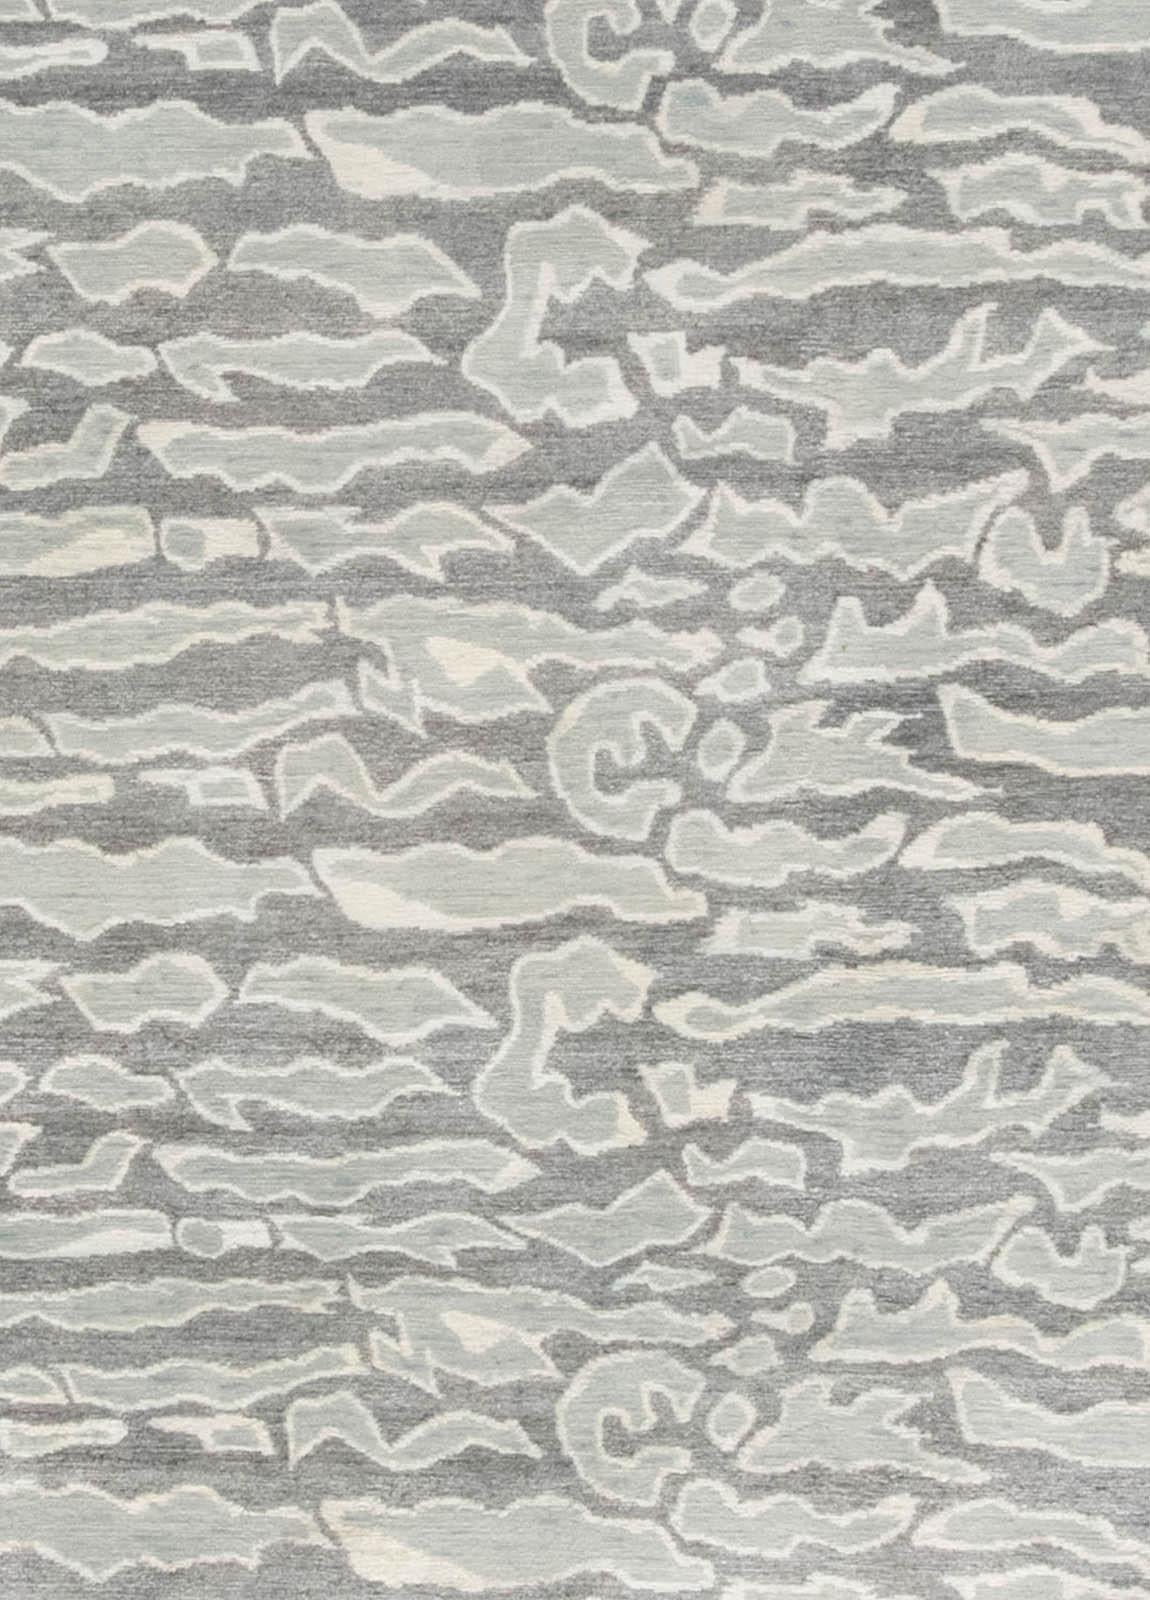 Contemporary Beach Pebbles handmade aloe silk and wool rug by Doris Leslie Blau
Size: 13'5